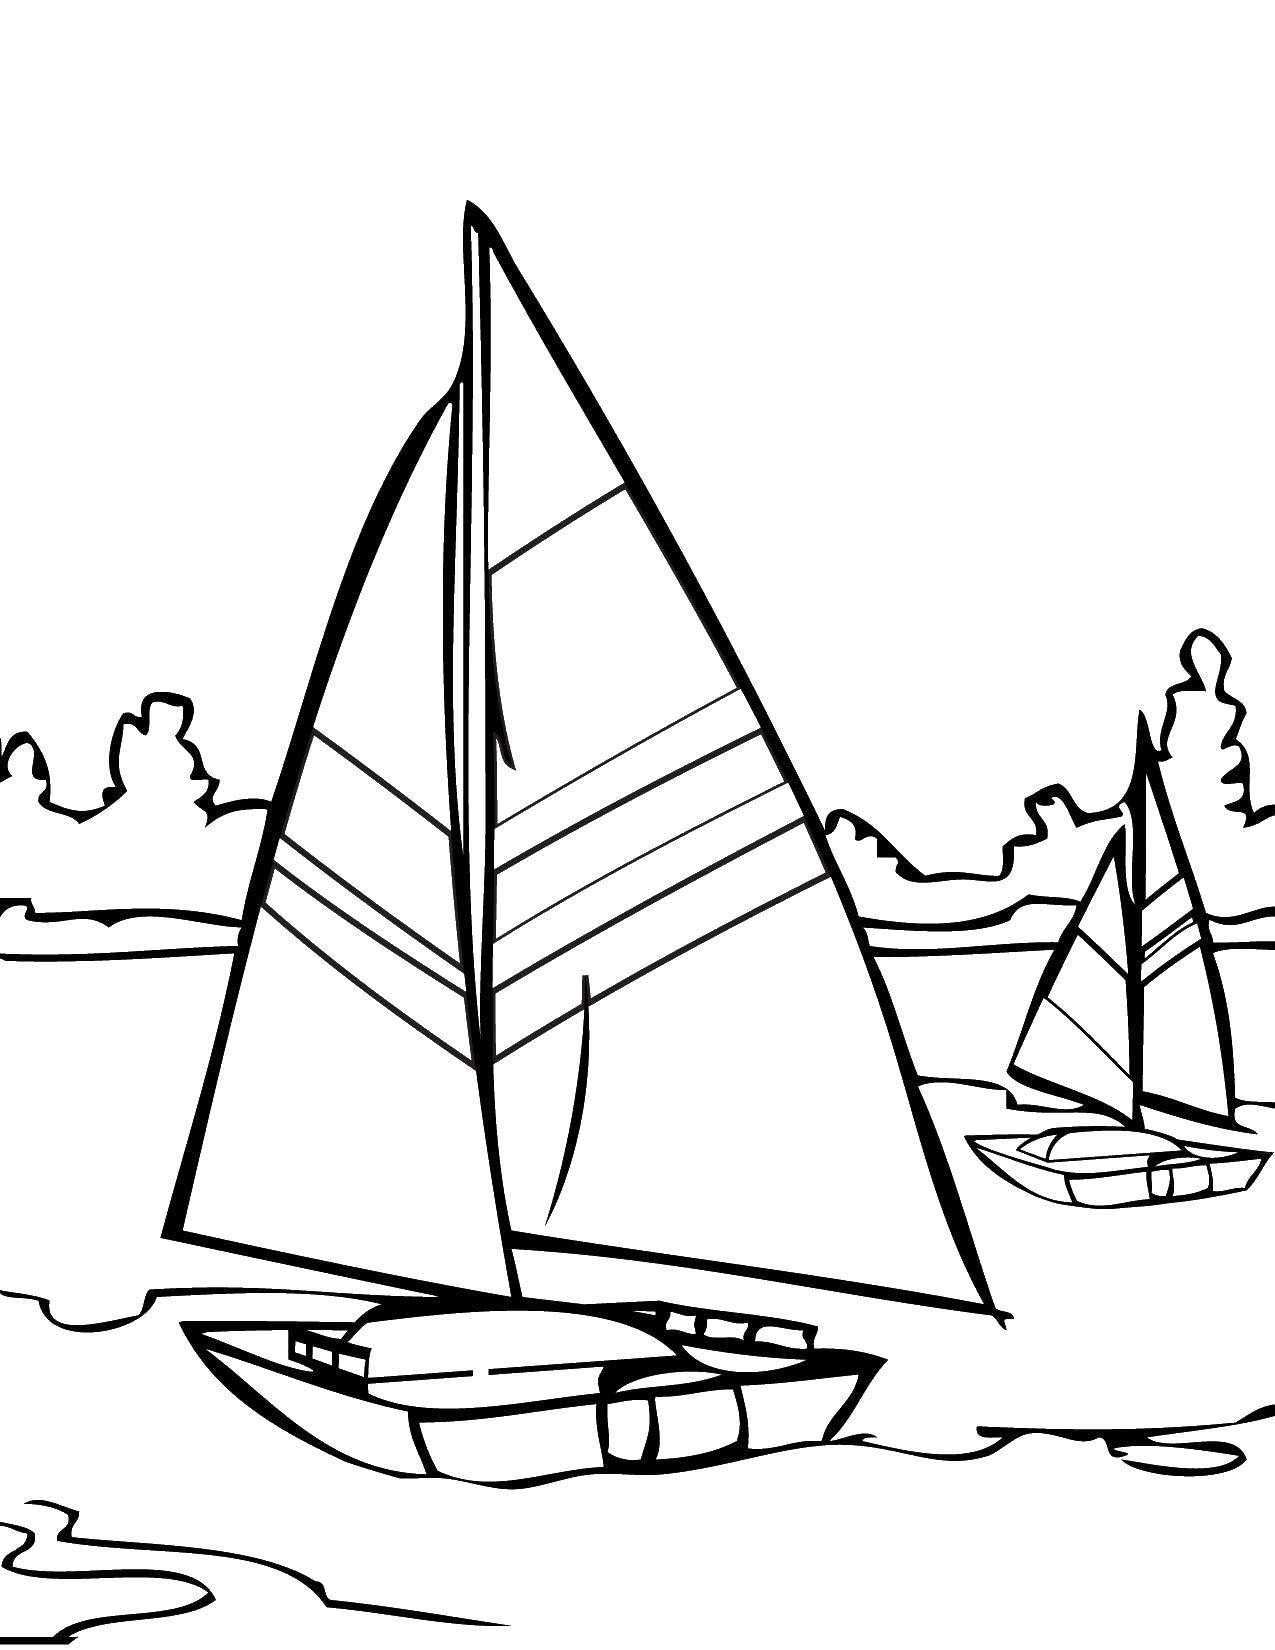 Coloring Sailing. Category Sports. Tags:  sports, sailing, sails.